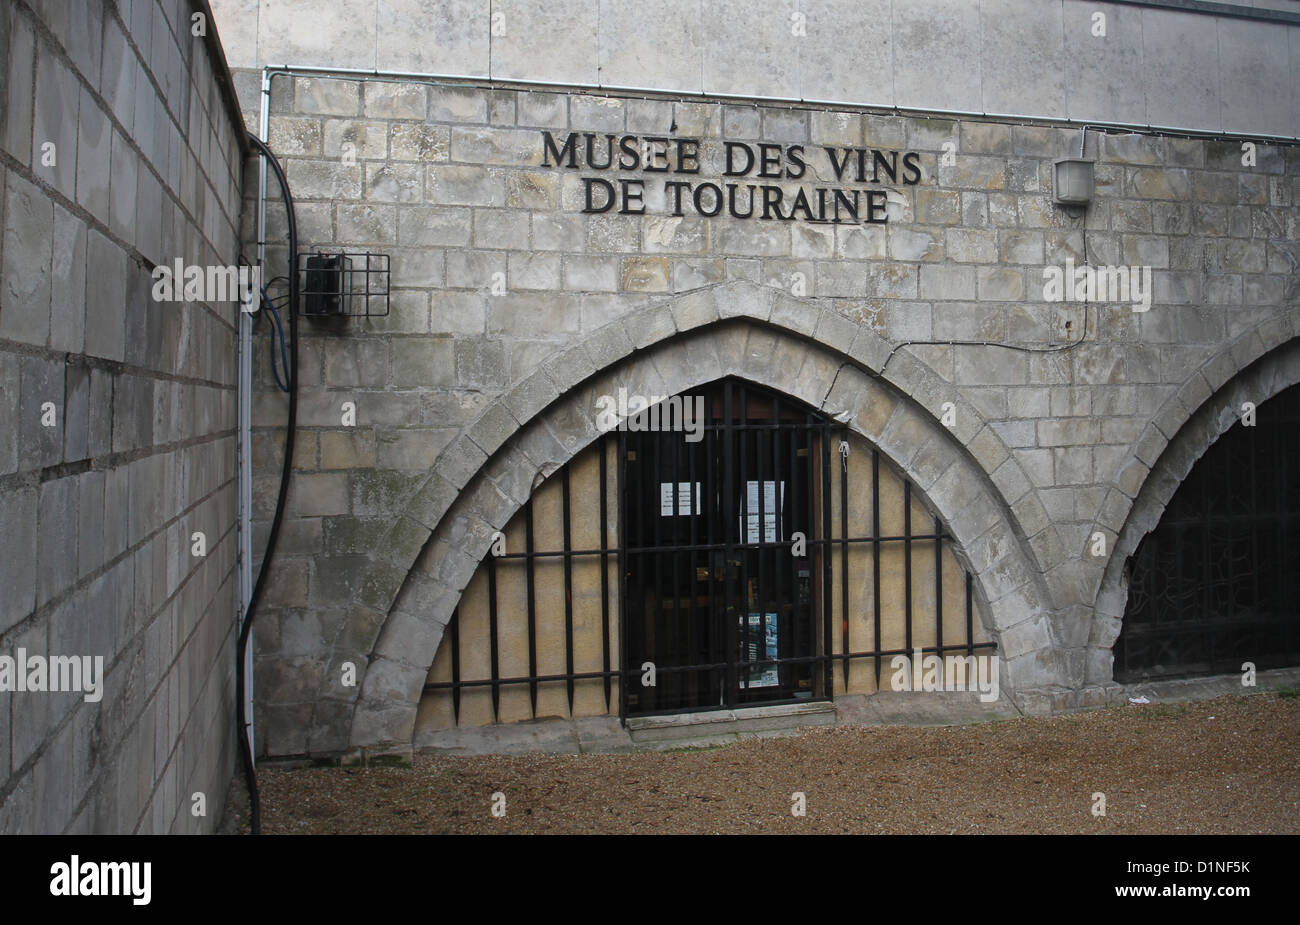 Außenseite des Musee des Vins de Touraine Tours France Dezember 2011 Stockfoto